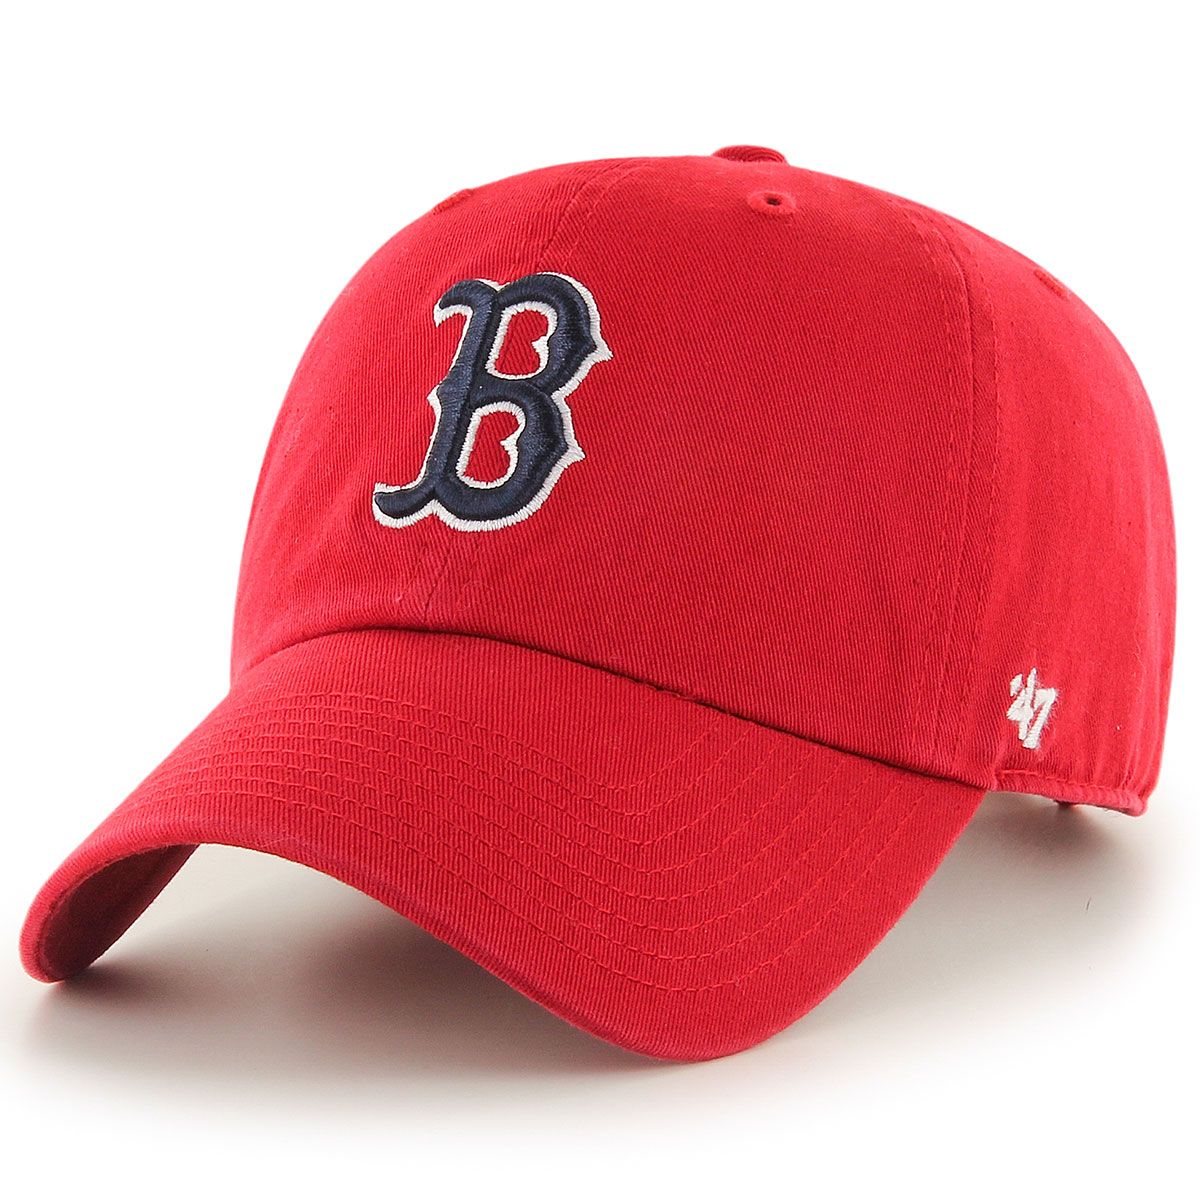 BOSTON RED SOX Women's Marathon Hat - Bob's Stores